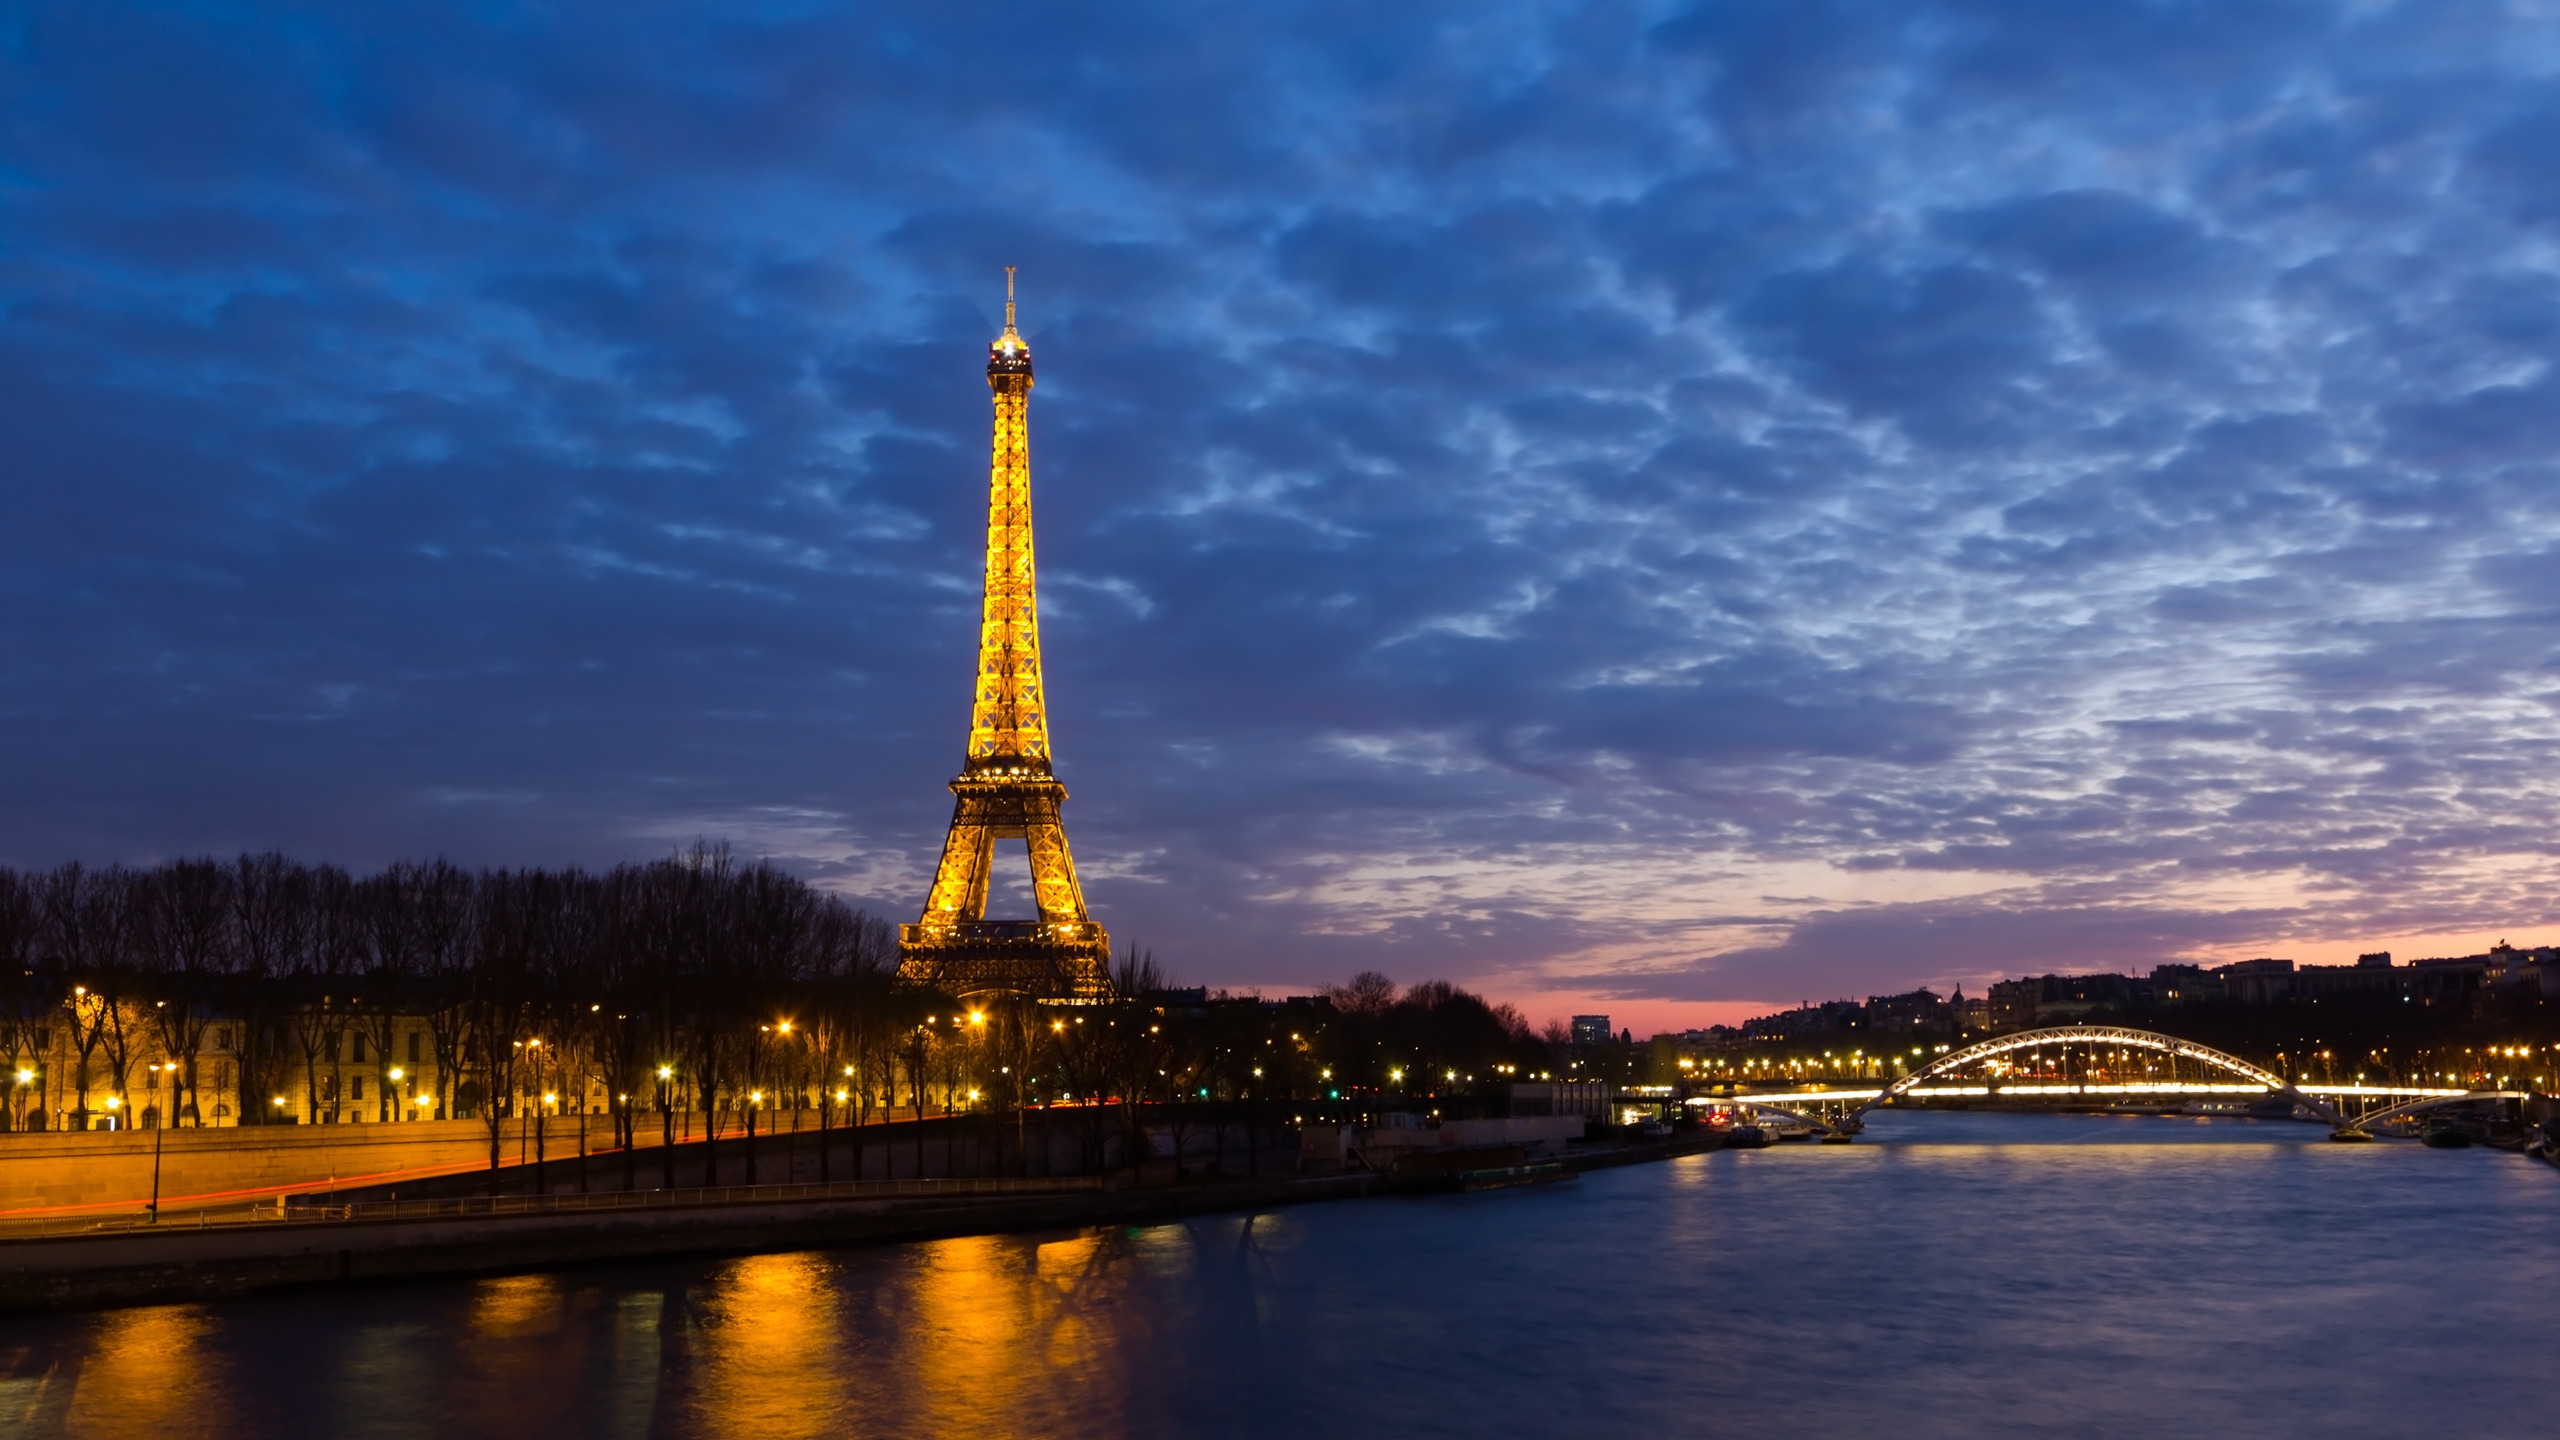 Eiffel Tower Sunset for 2560x1440 HDTV resolution